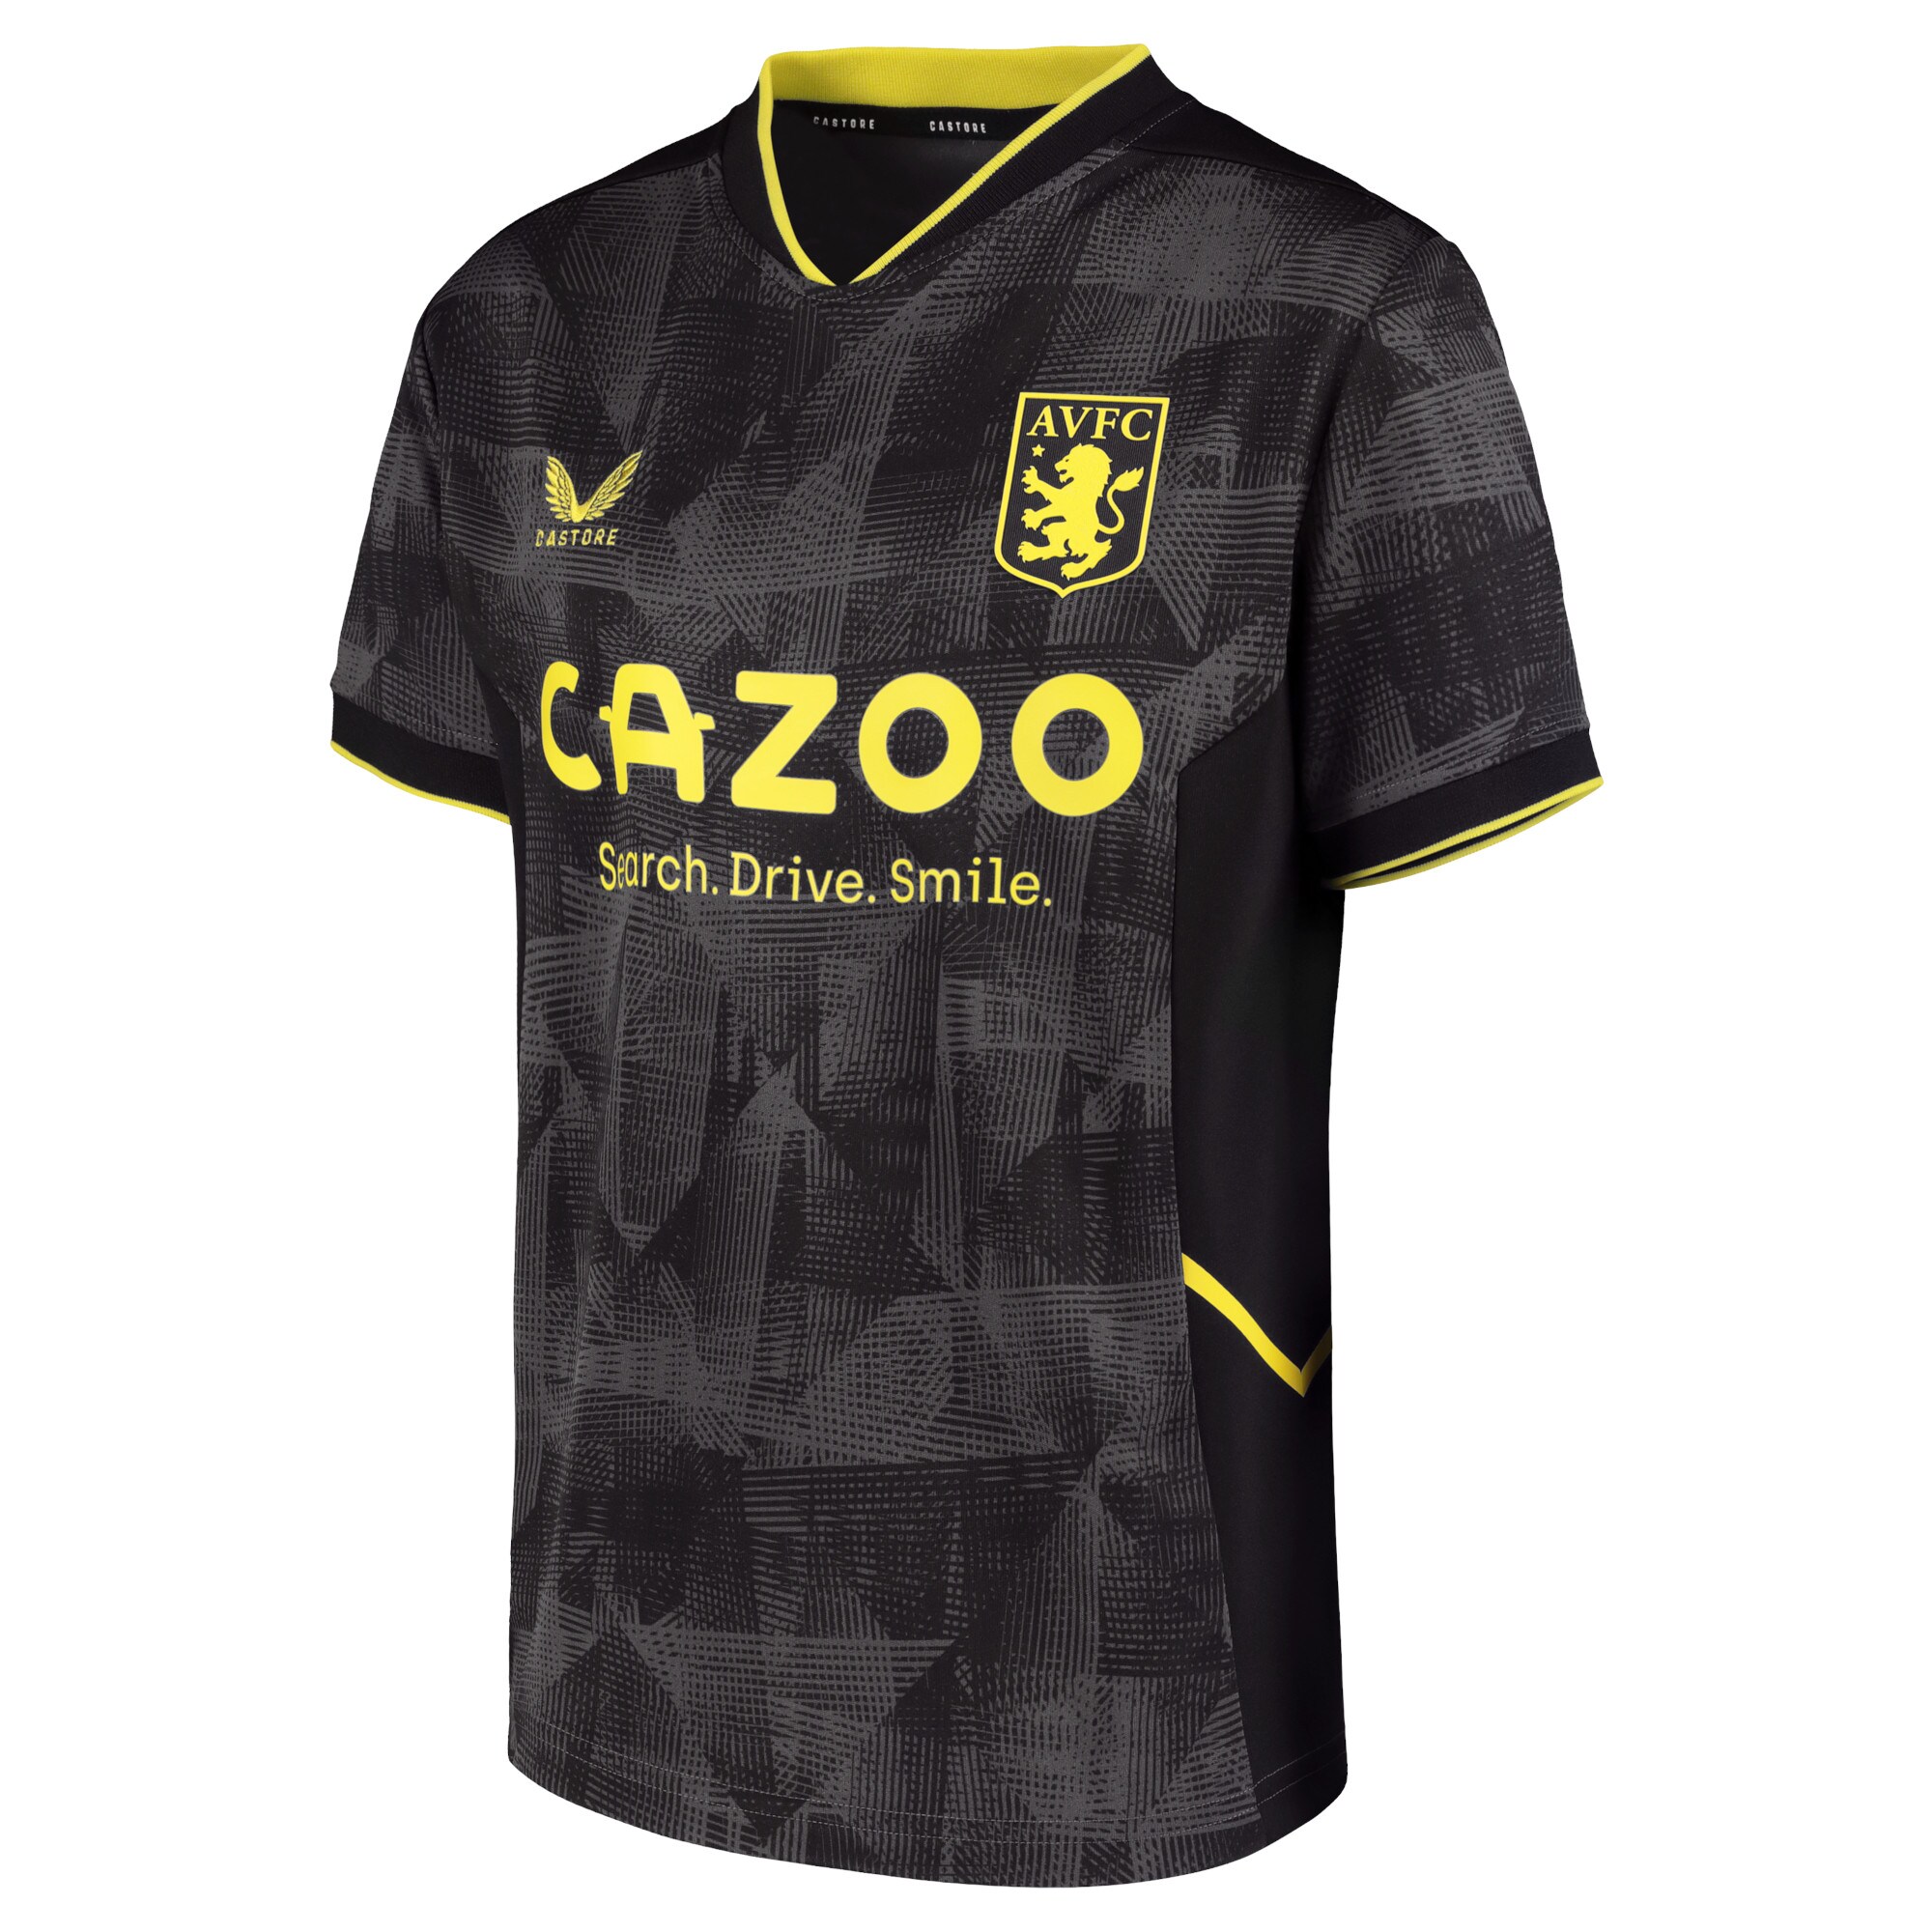 Aston Villa Cup Third Shirt 2022-23 with Sanson 8 printing